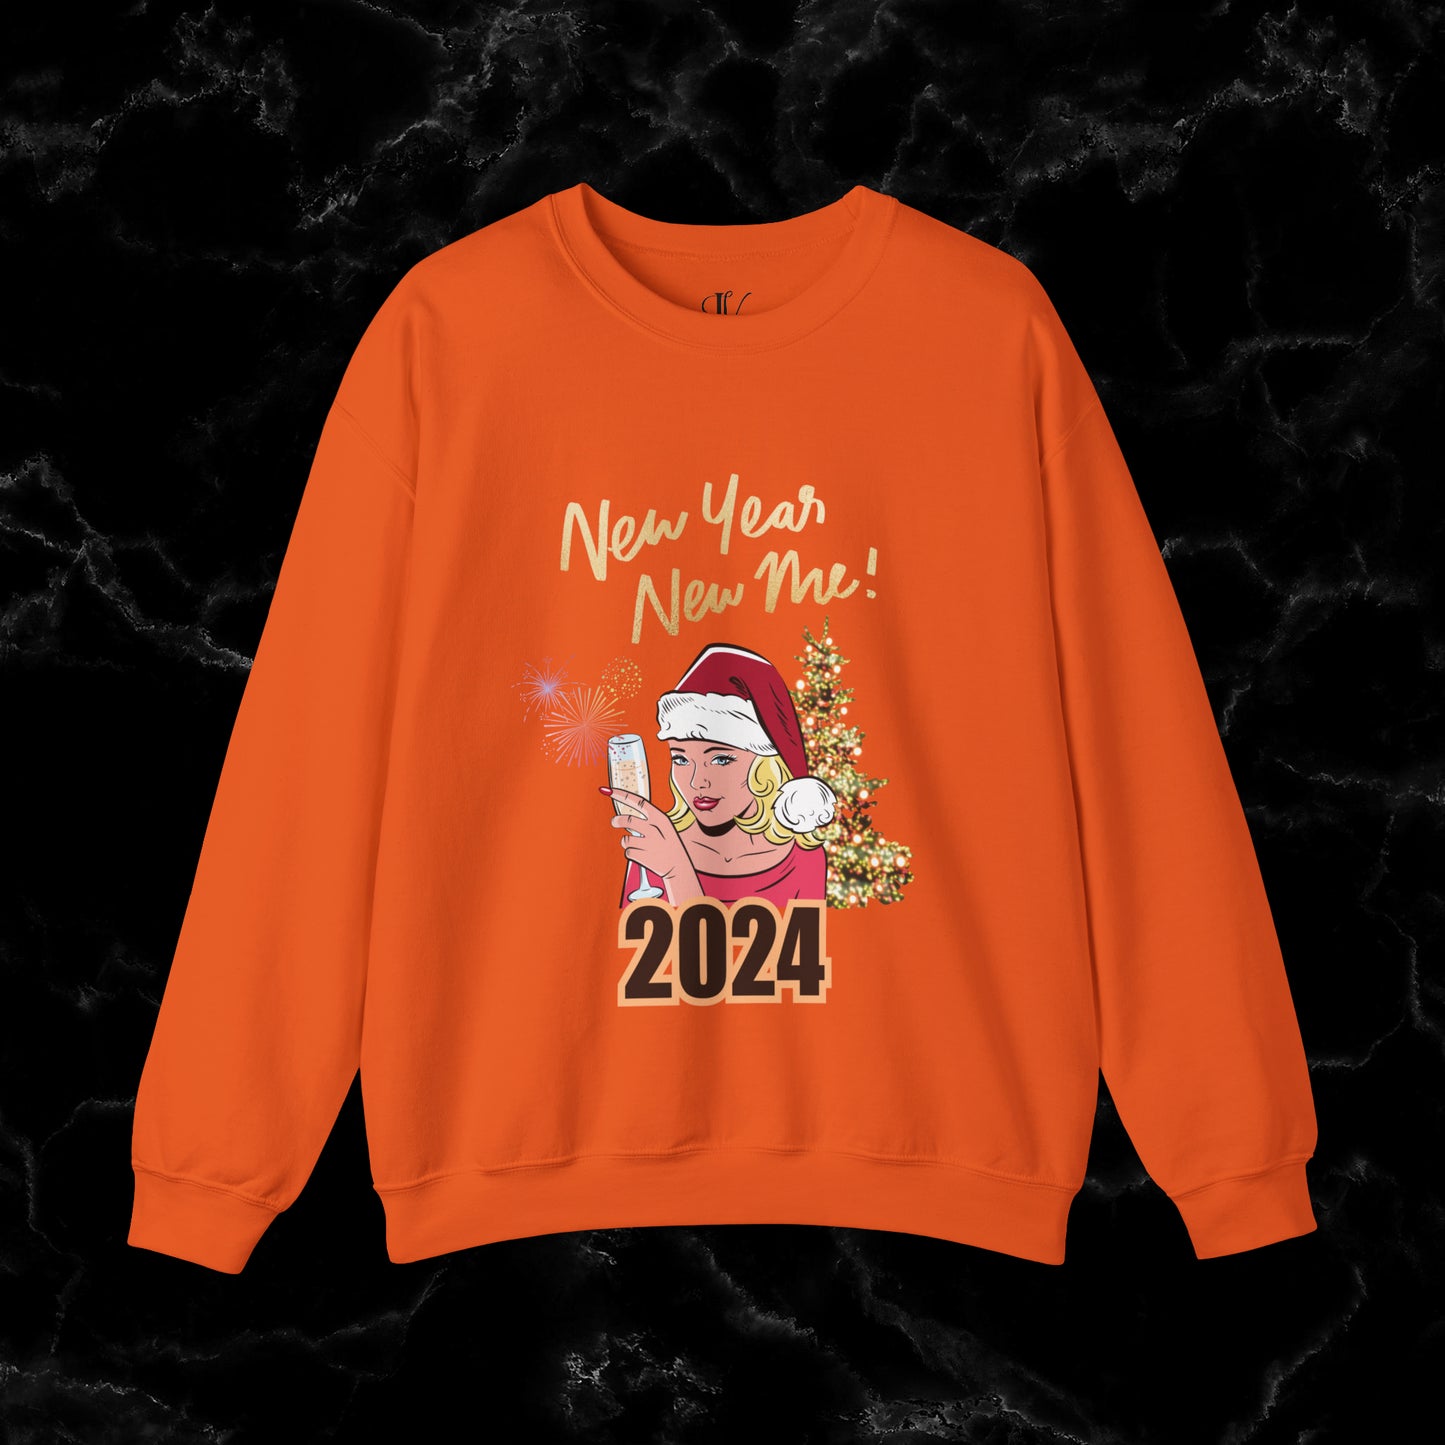 New Year New Me Sweatshirt - Motivational, Inspirational Resolutions Shirt, Christmas Family Tee Sweatshirt S Orange 